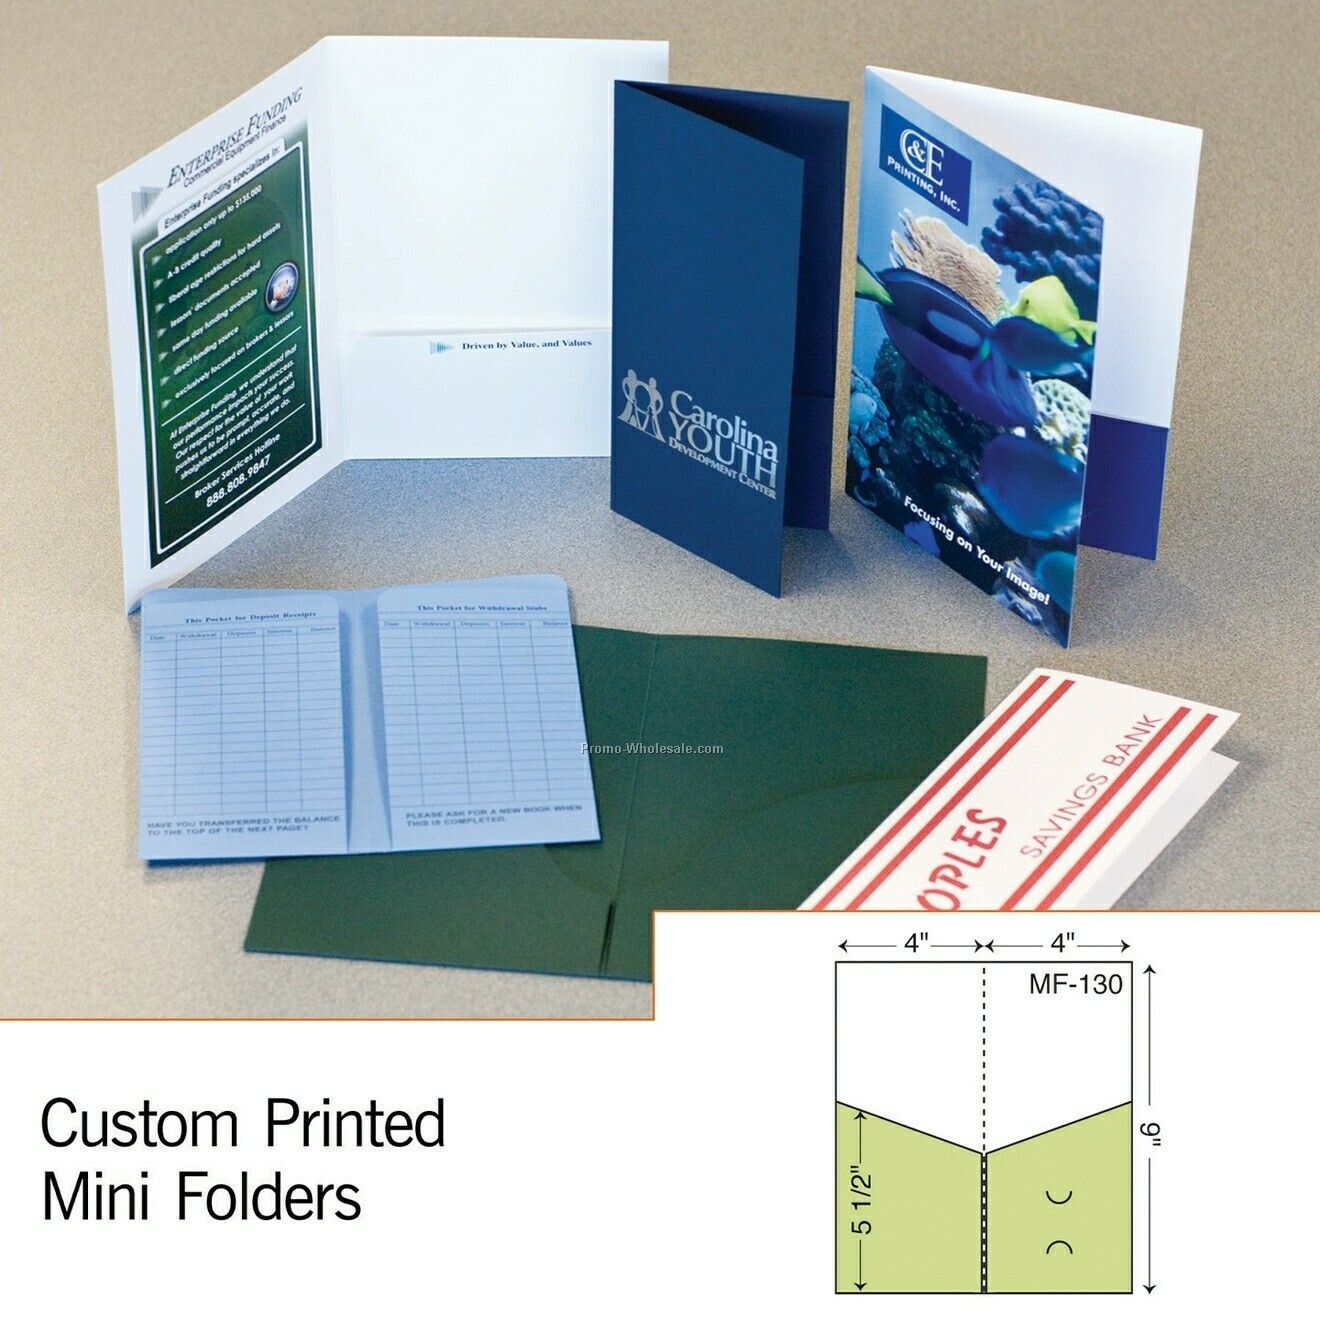 4"x9" Mini Folder W/ Right Pocket (4 Color Process)